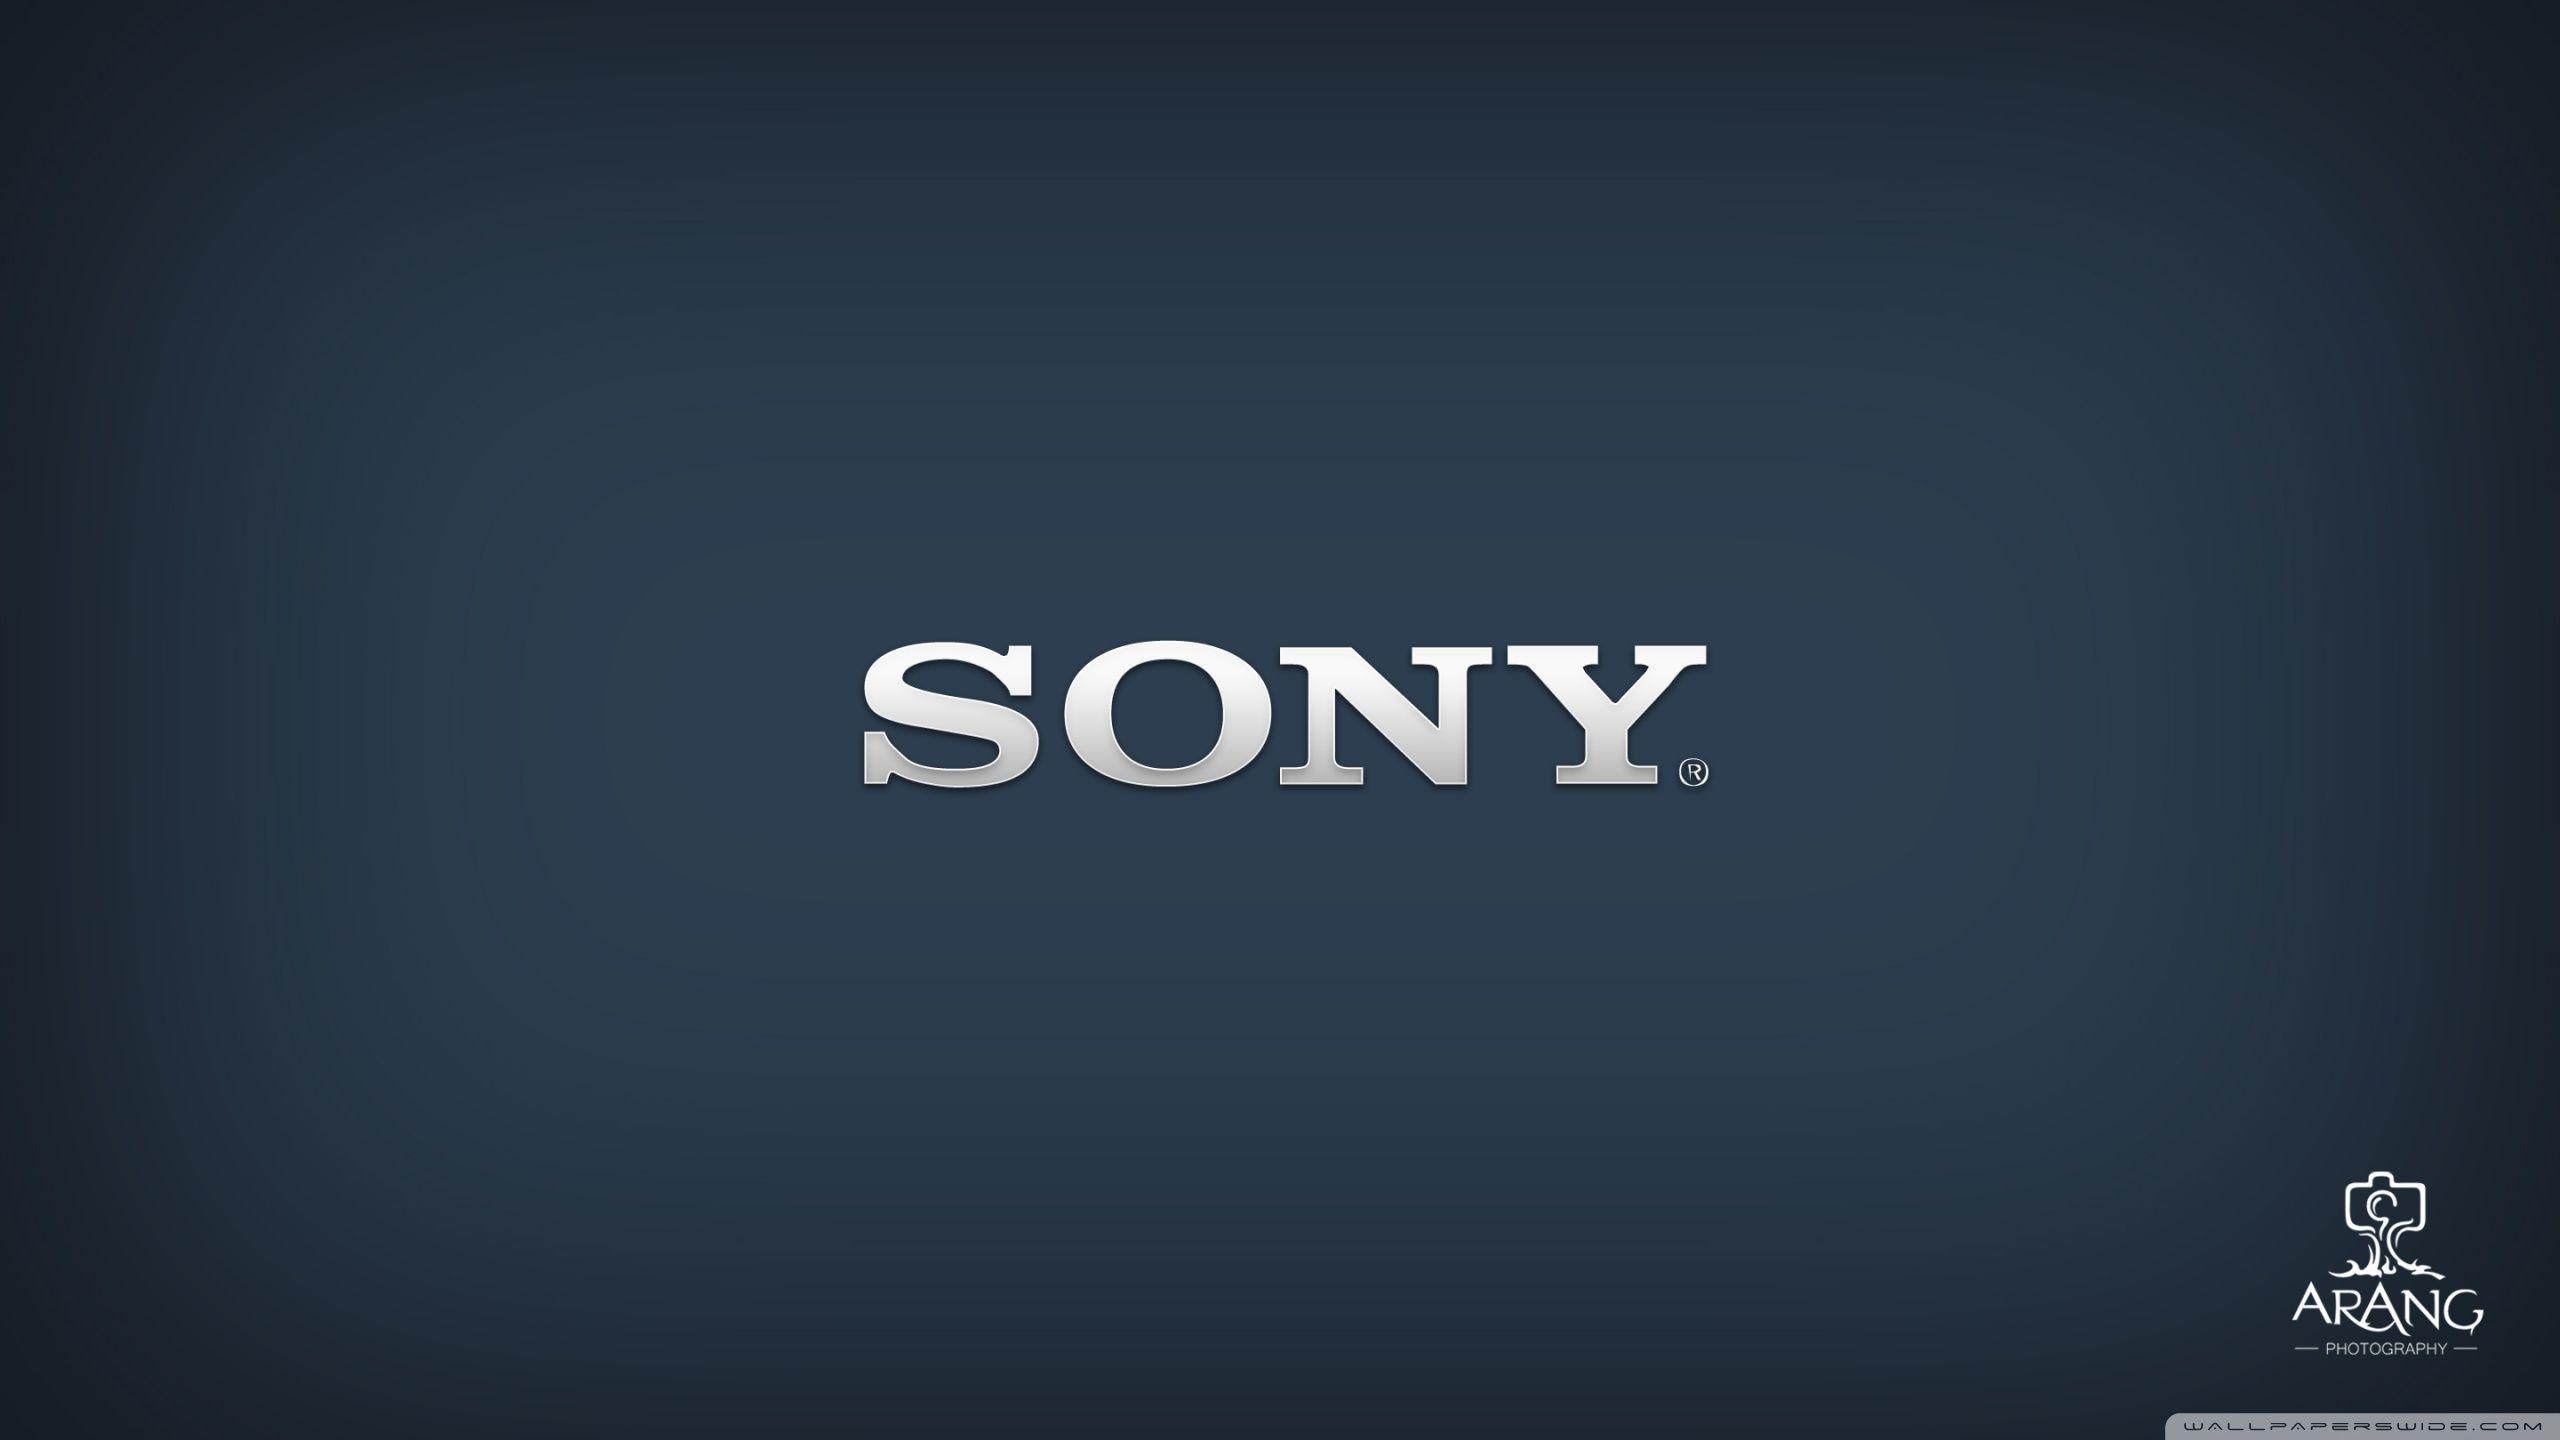 Sony Logo 2014 HD desktop wallpapers : High Definition : Mobile